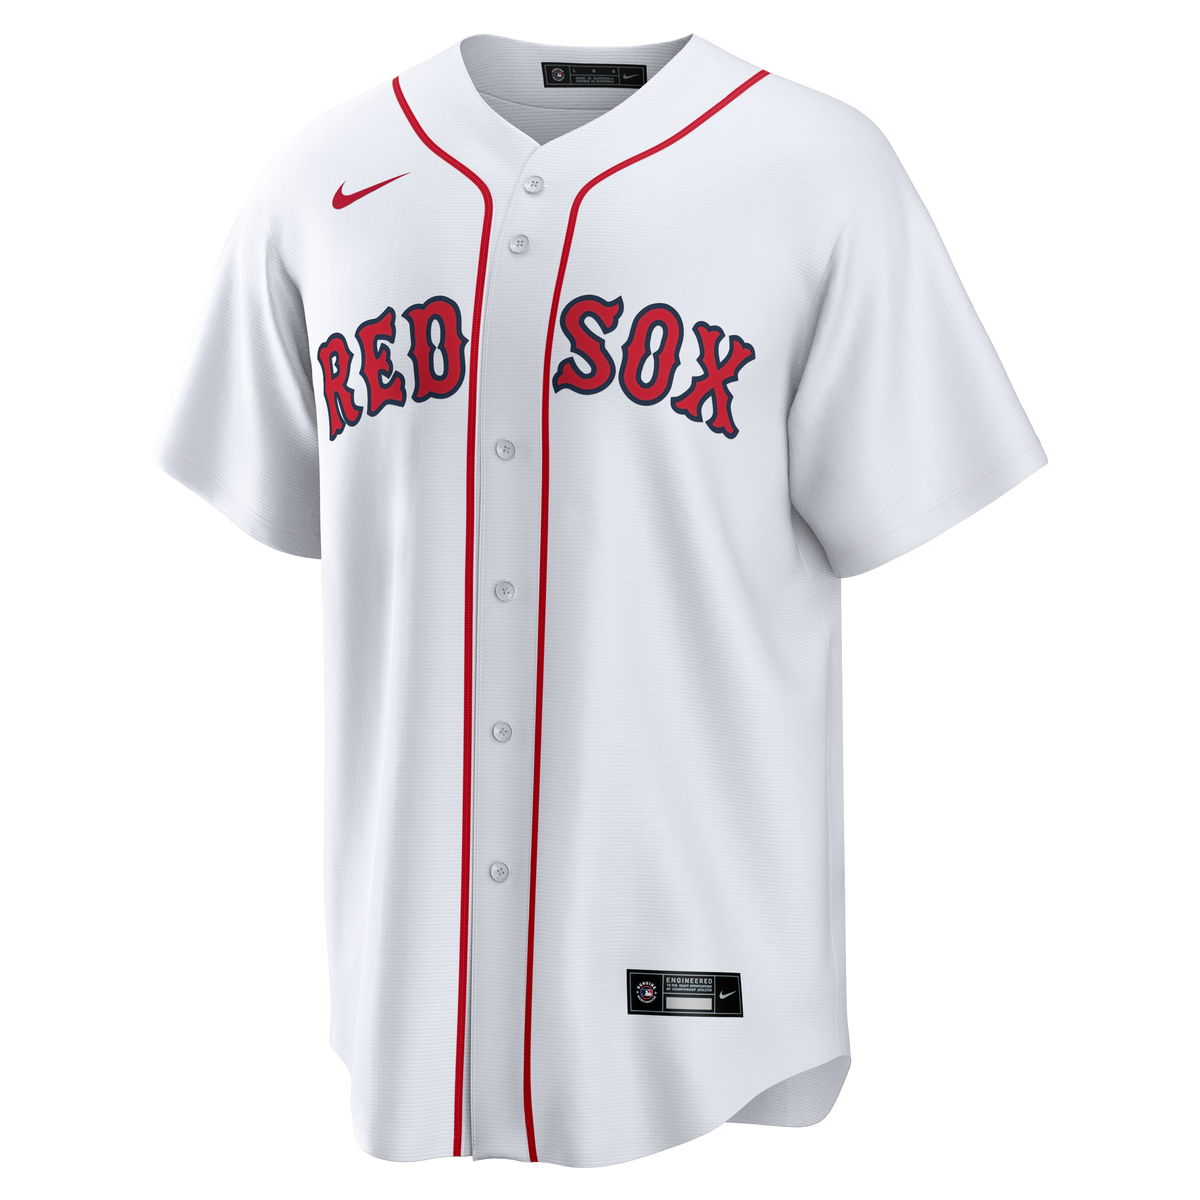 Boston Red Sox NIKE RED Home Alternate Masataka Yoshida #7